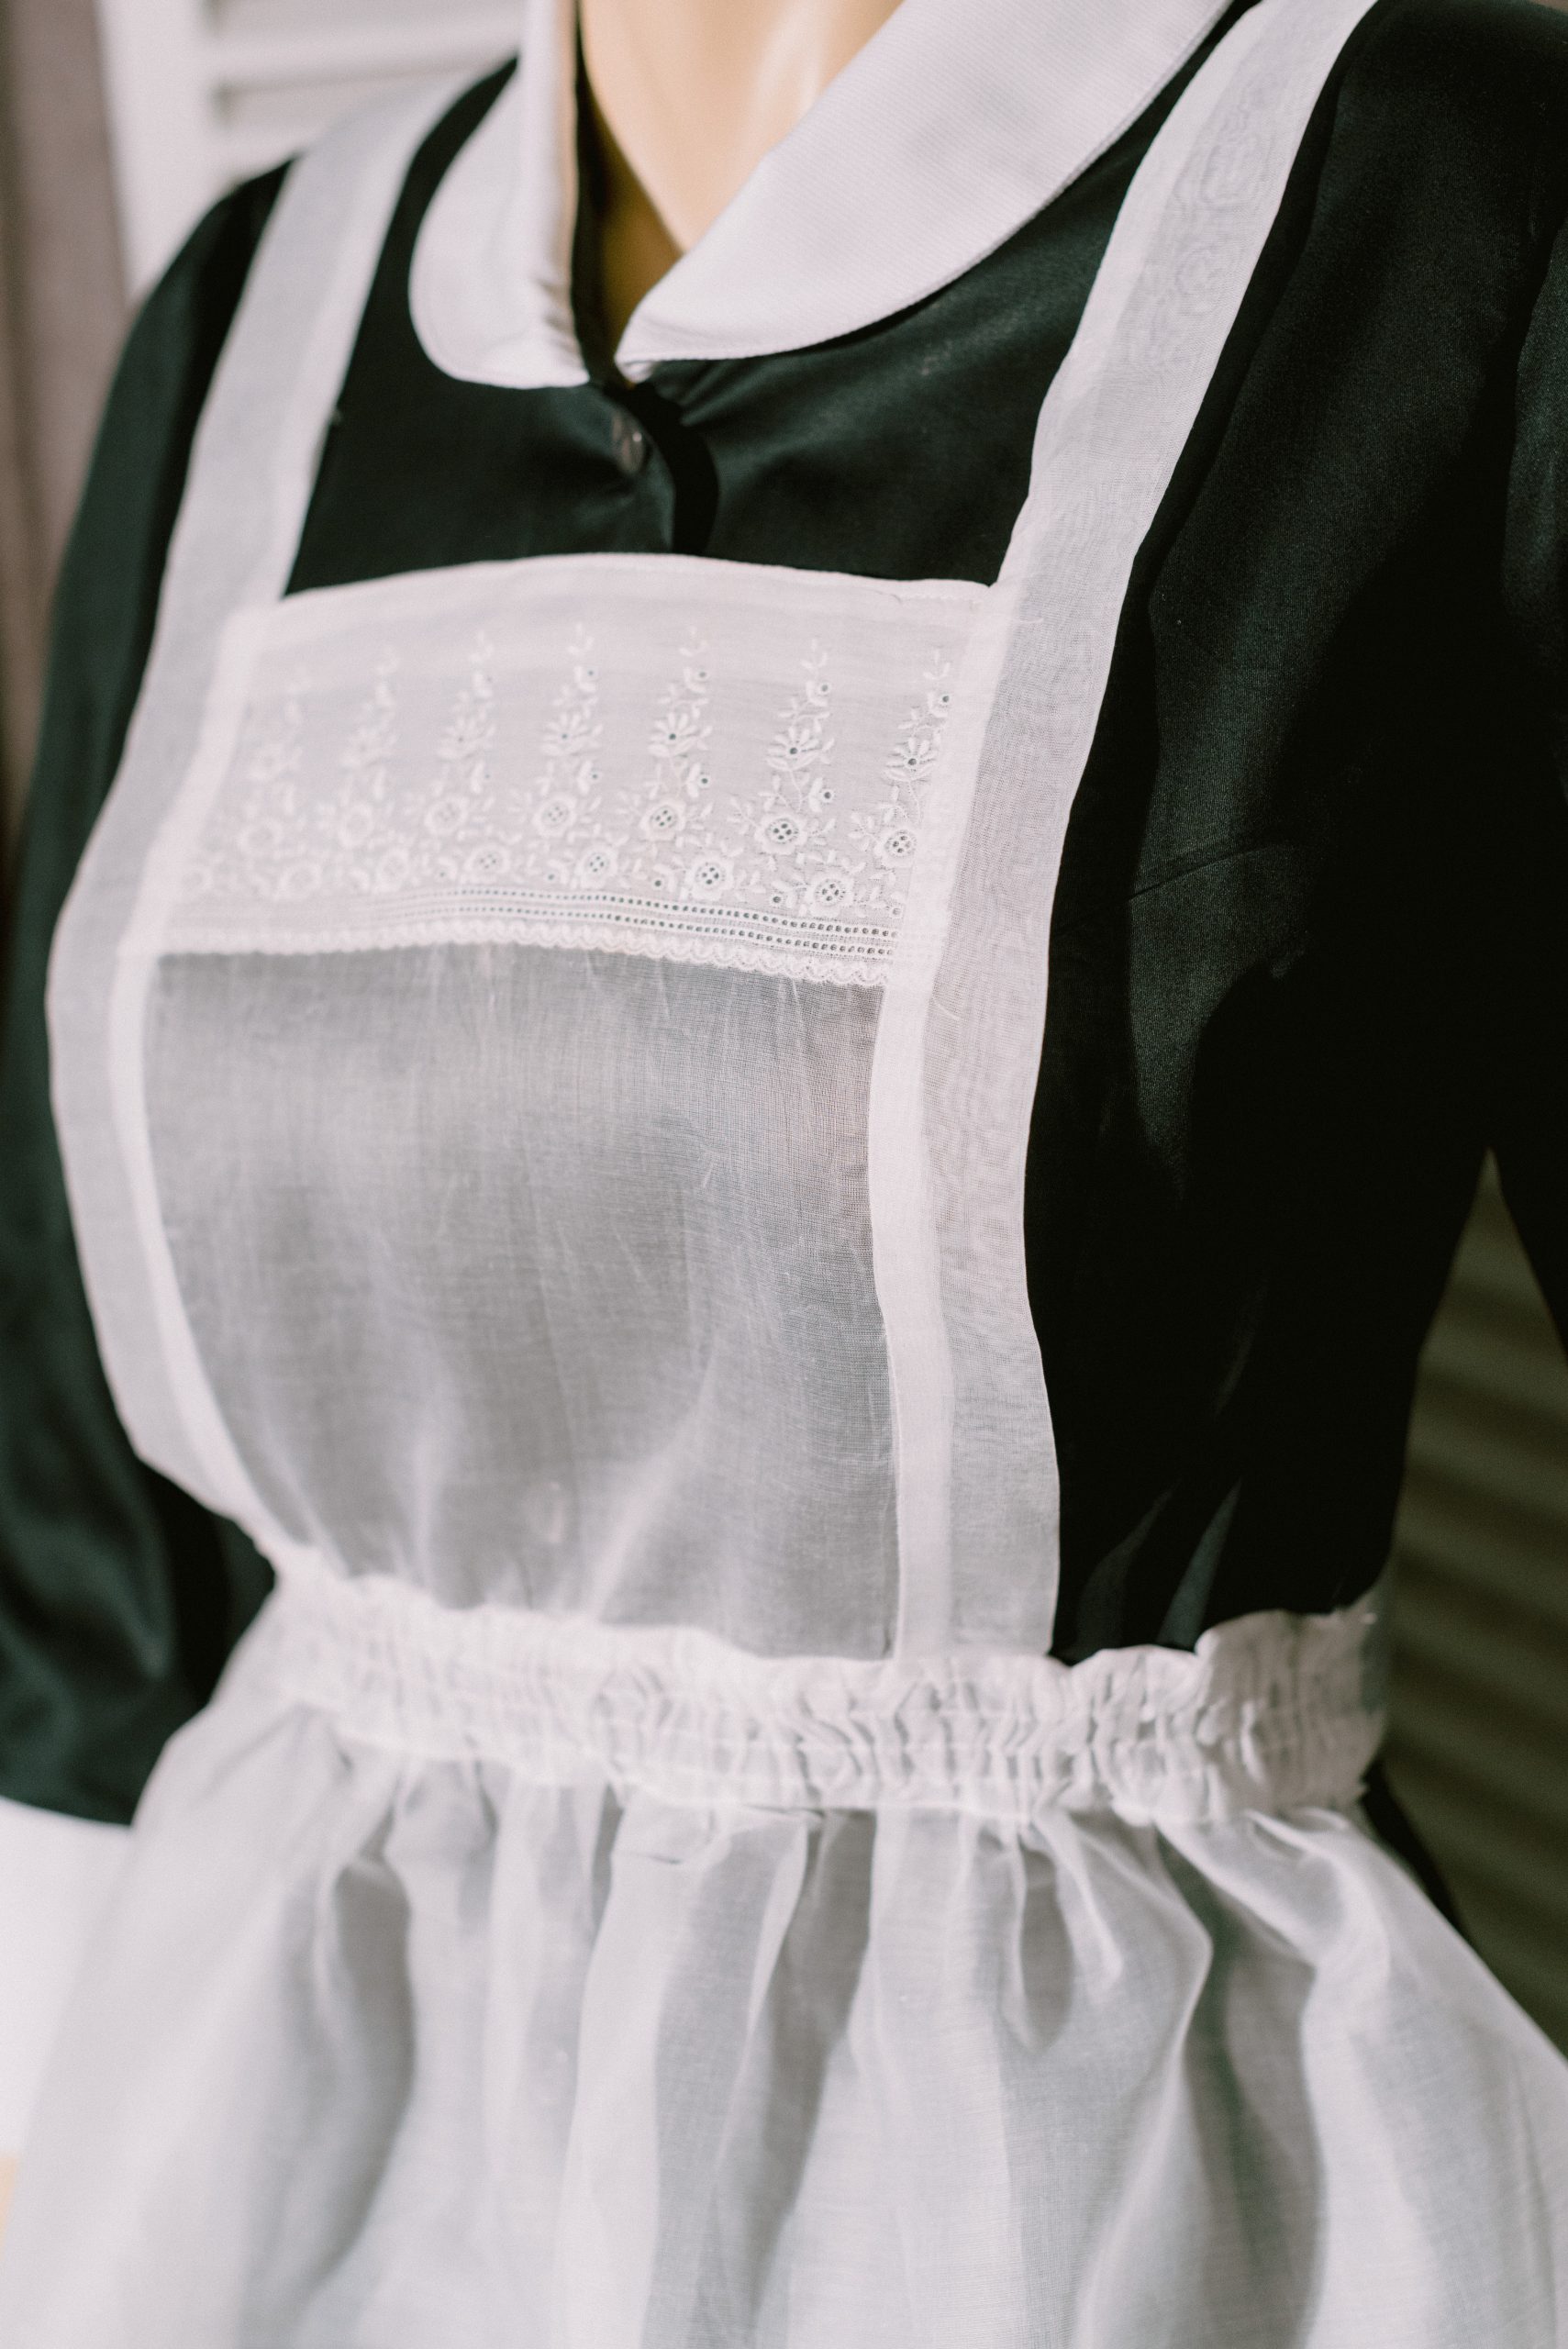 mindanao maid uniform